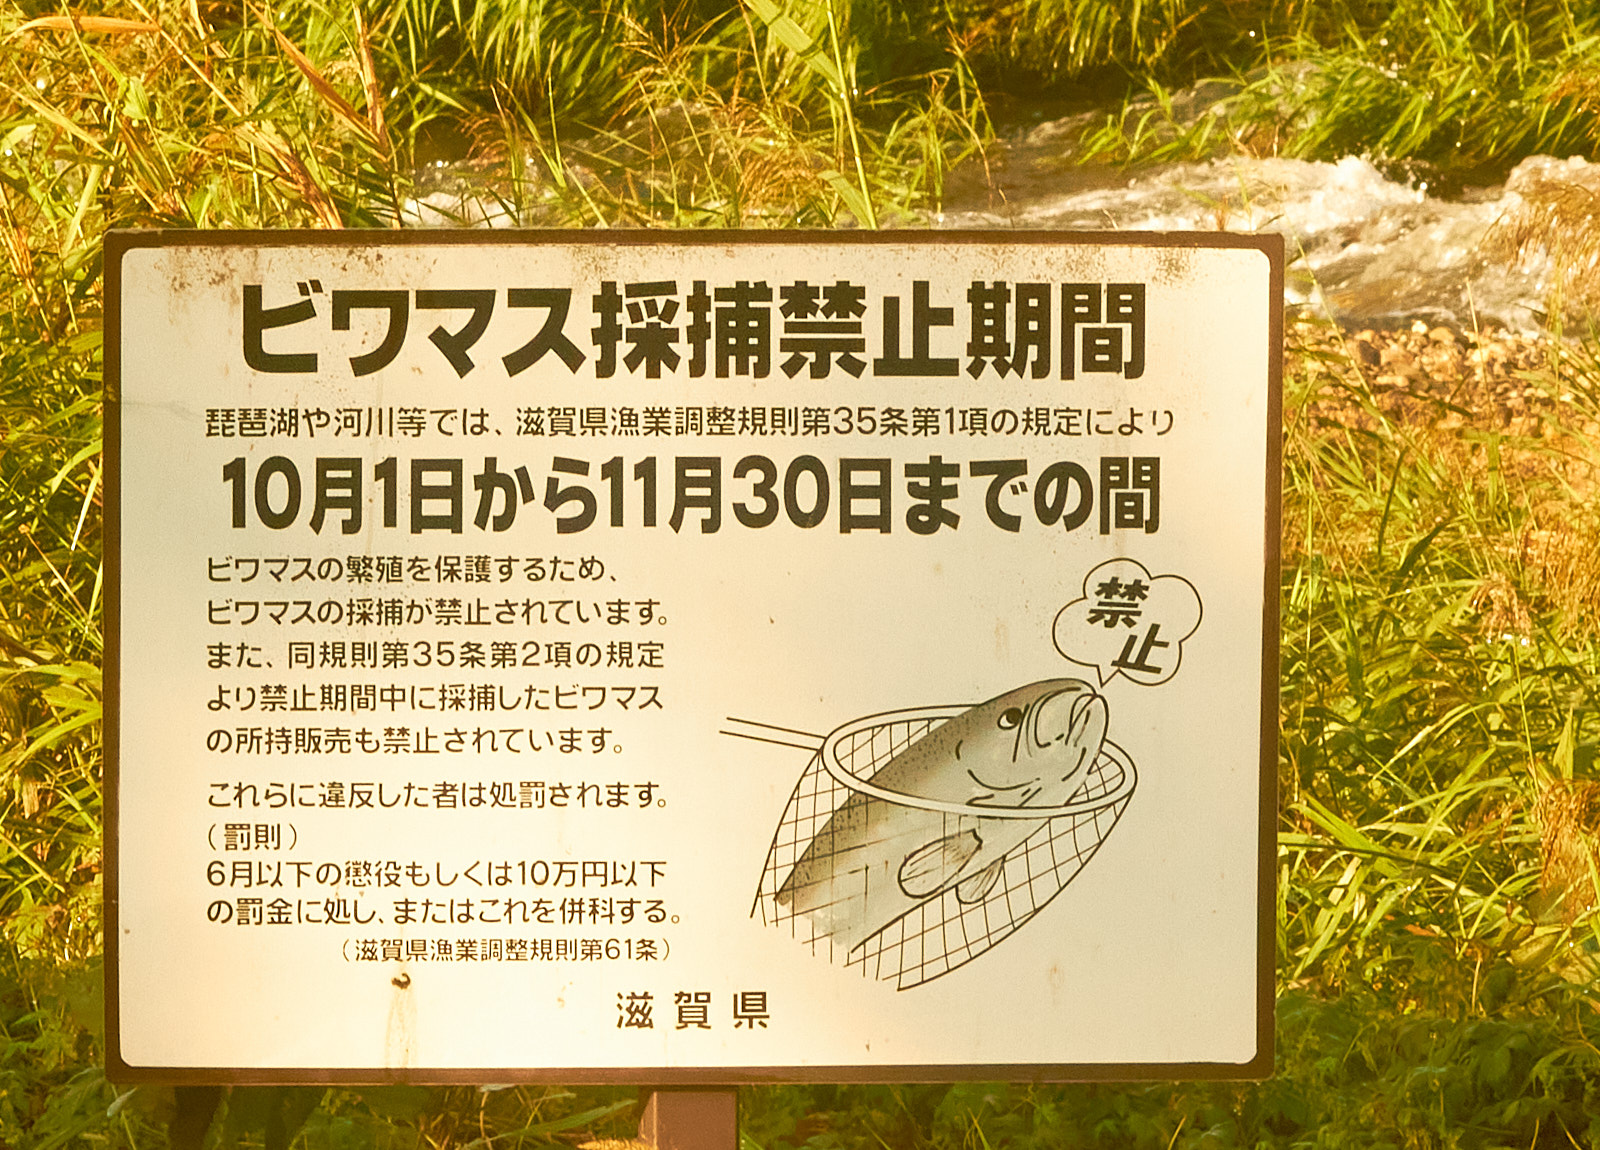 Makino – The Biwa trout